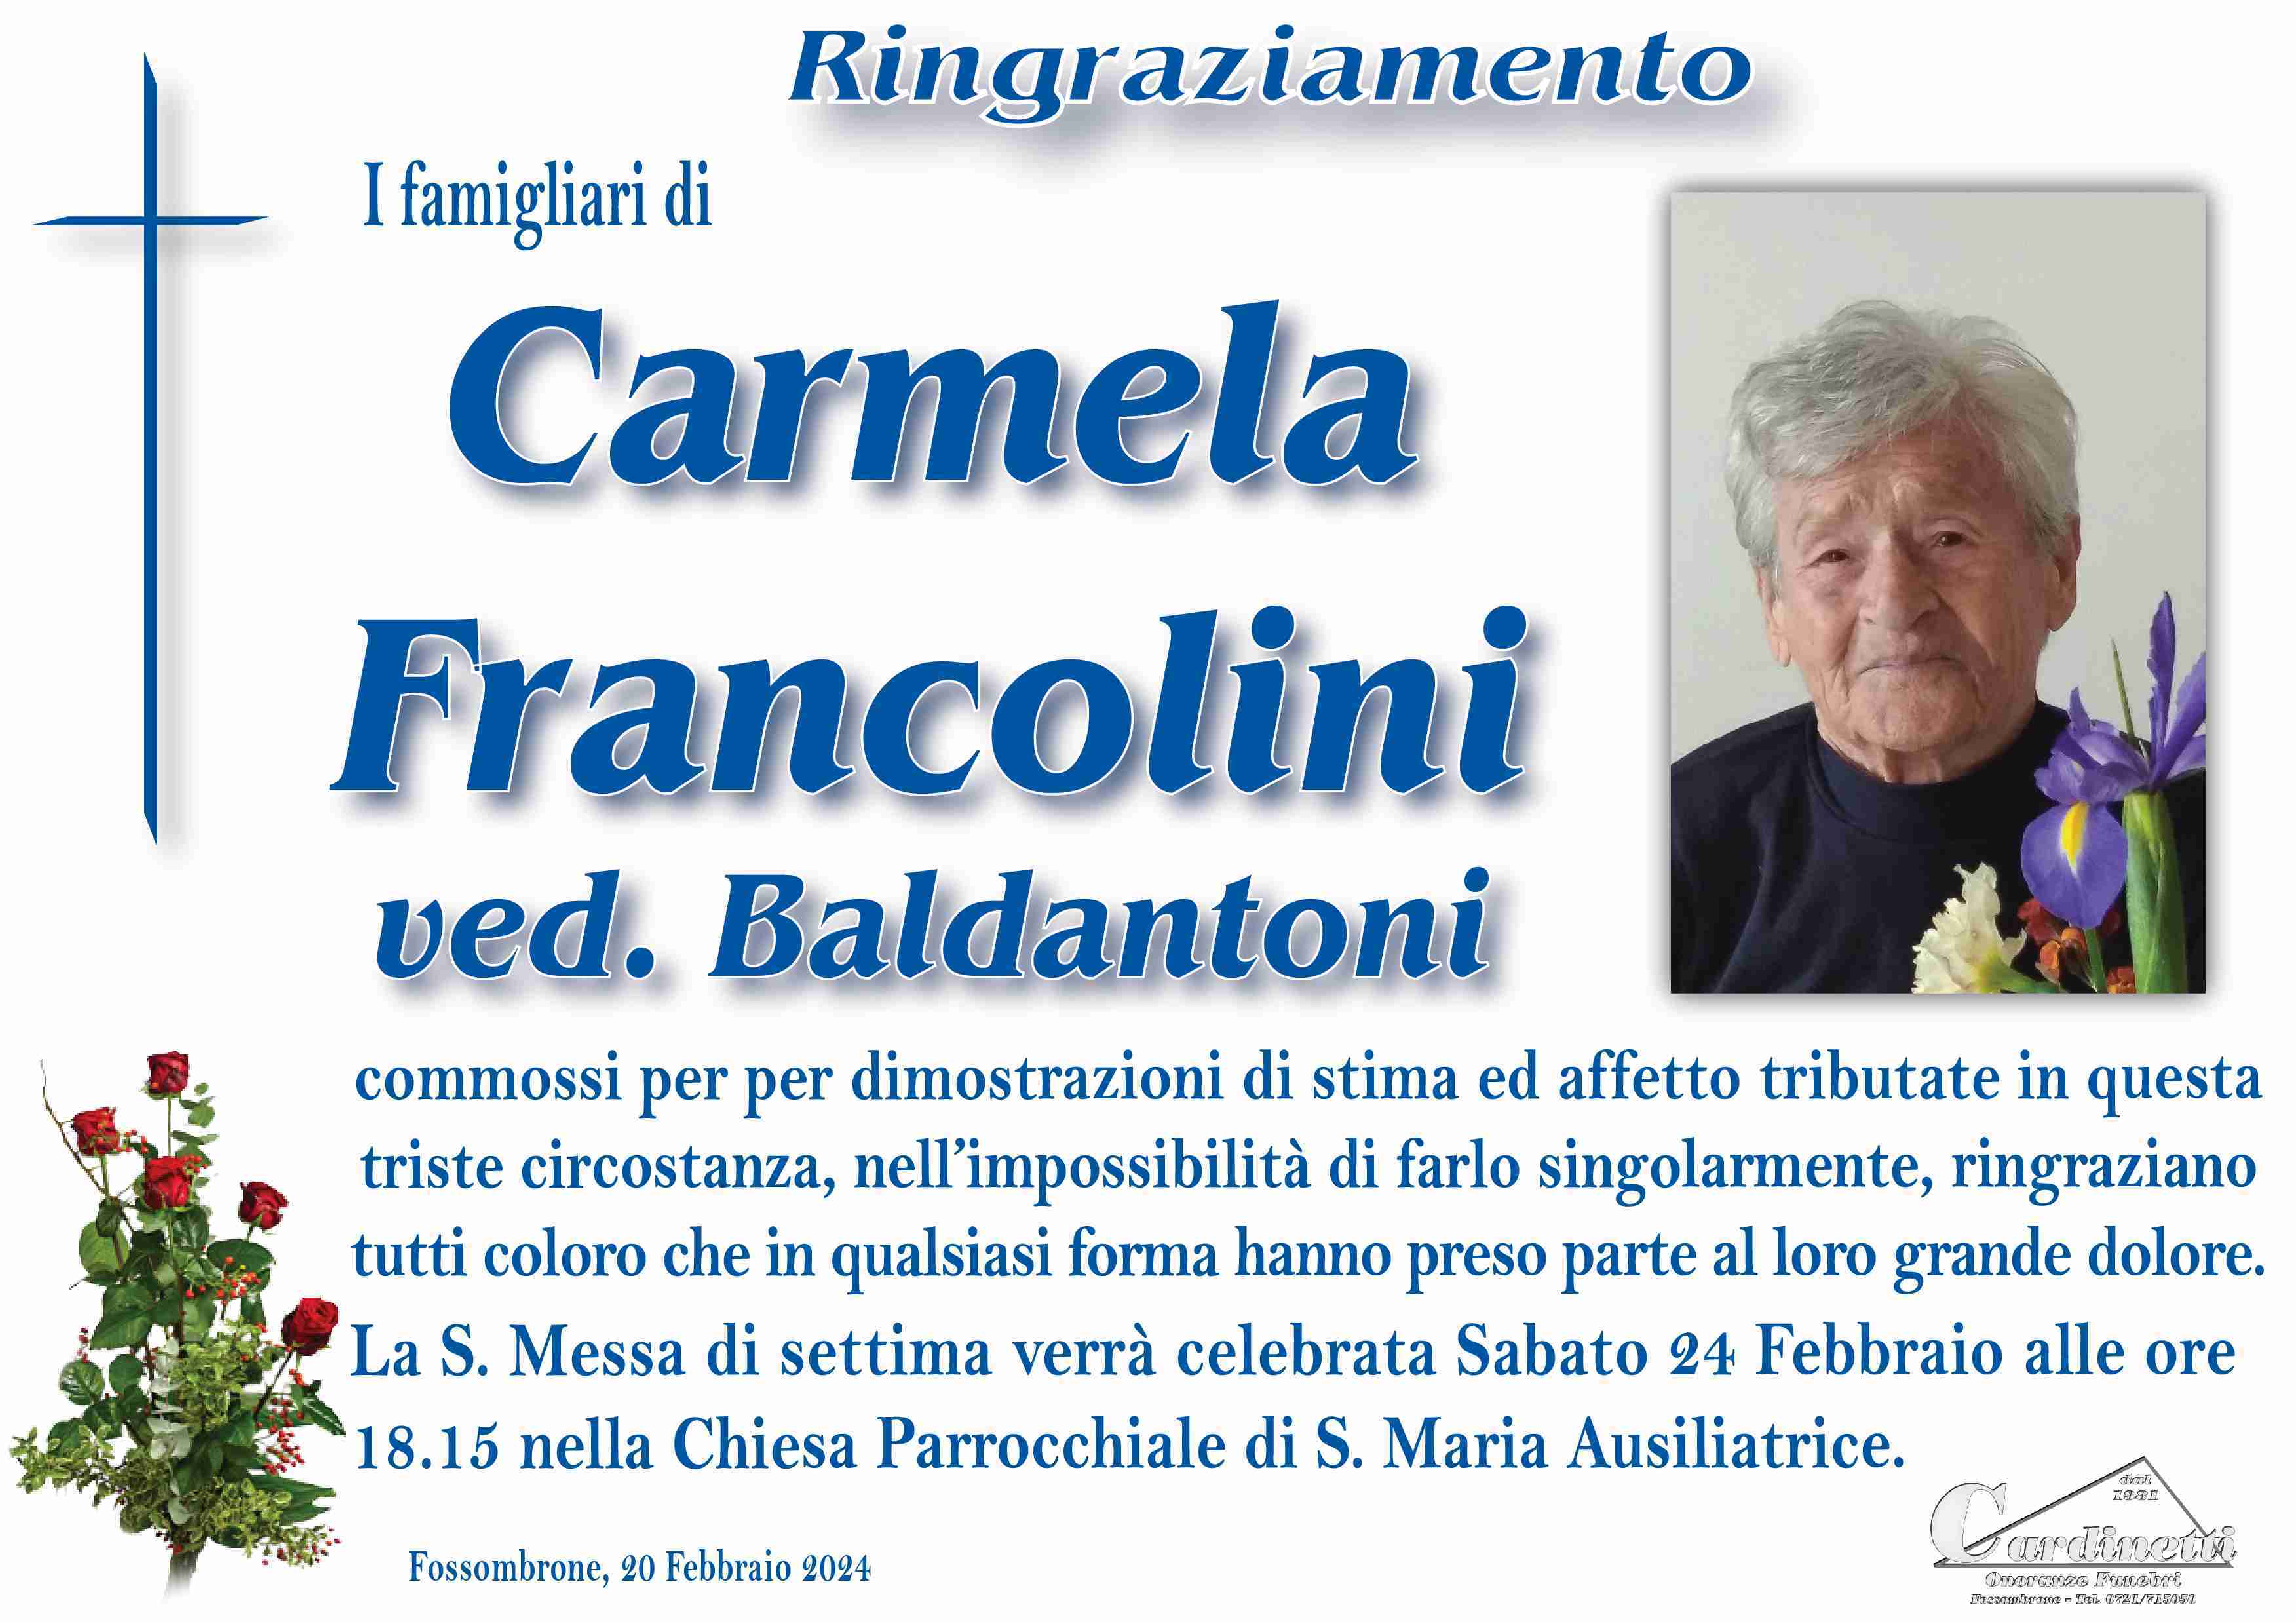 Carmela Francolini